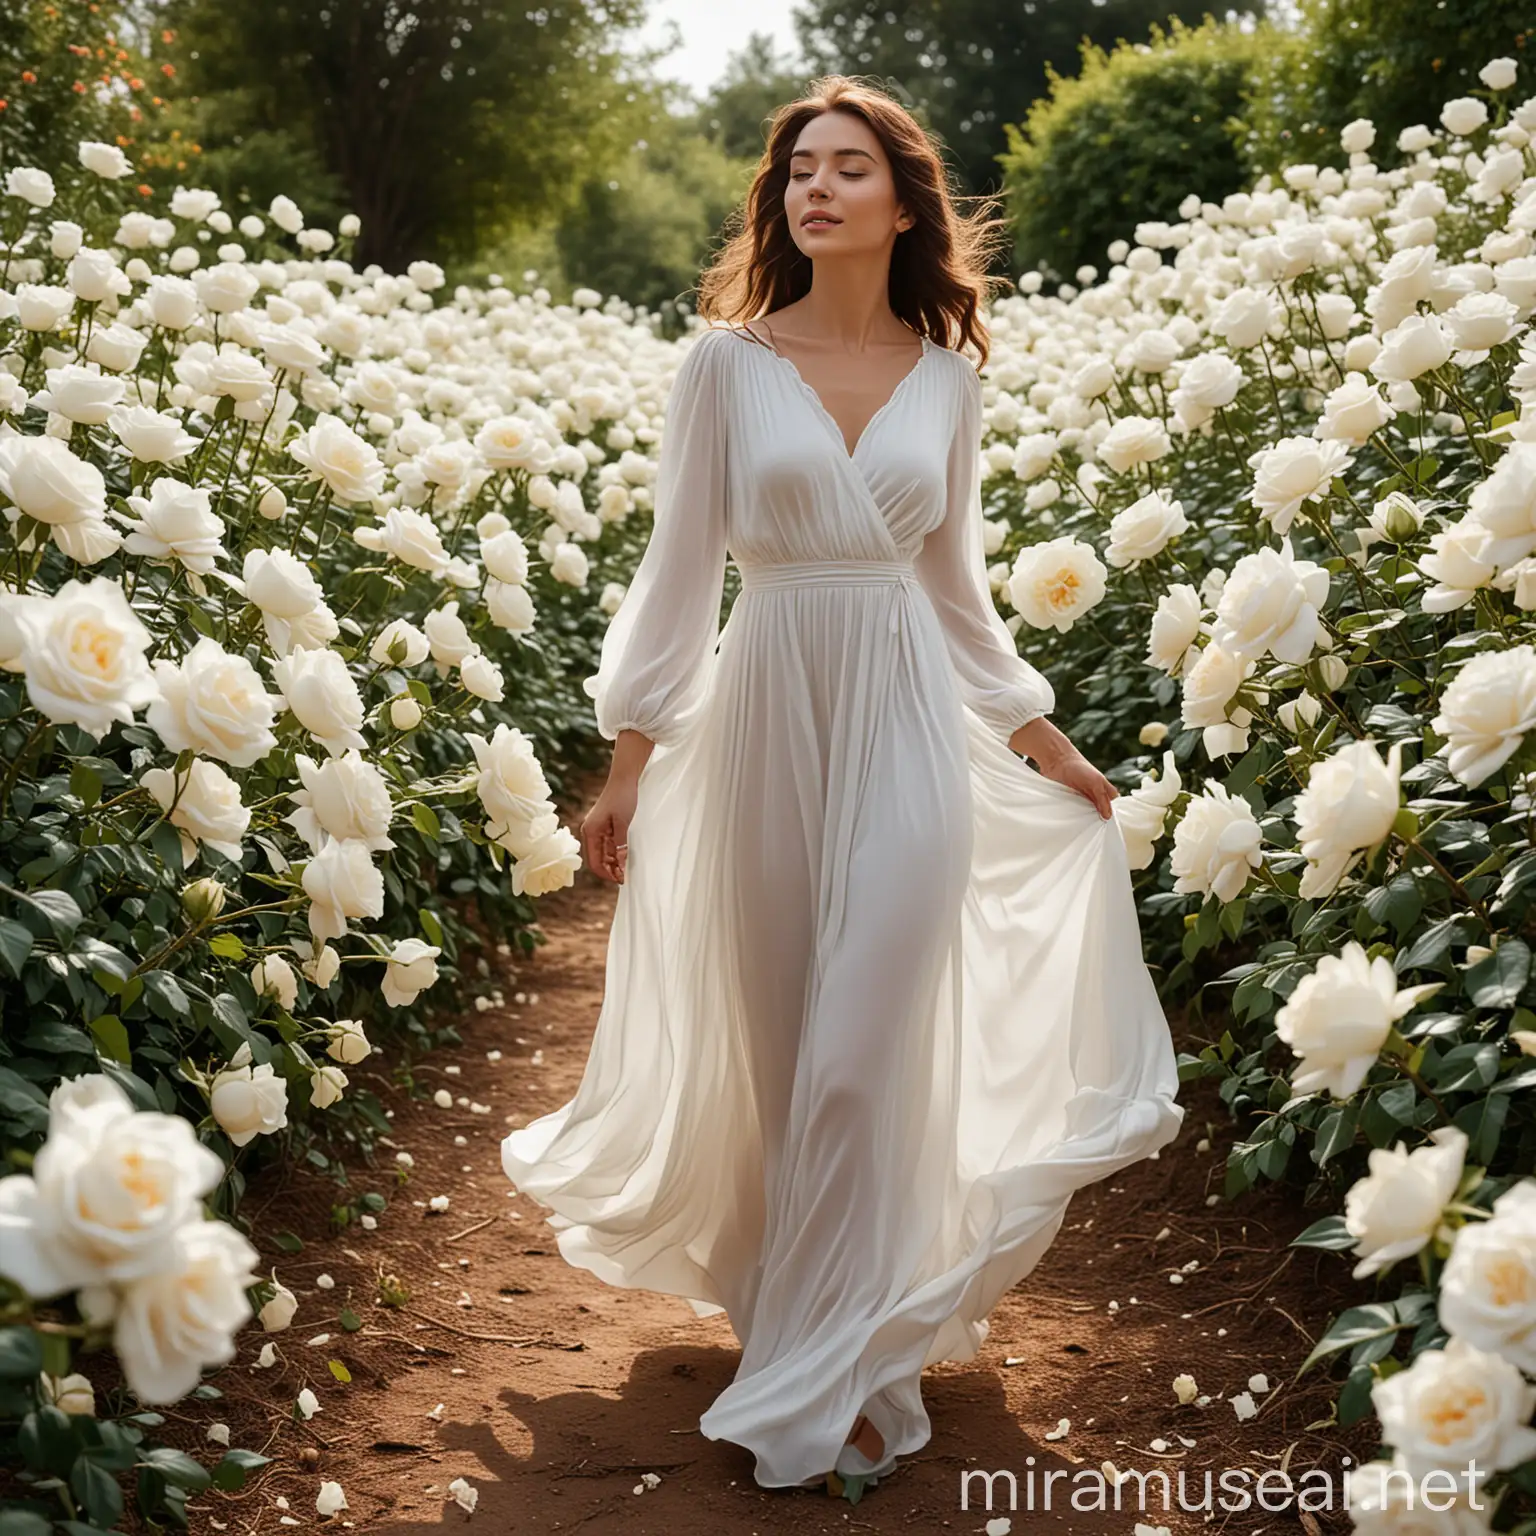 Graceful Woman in White Dress Walking Among White Roses